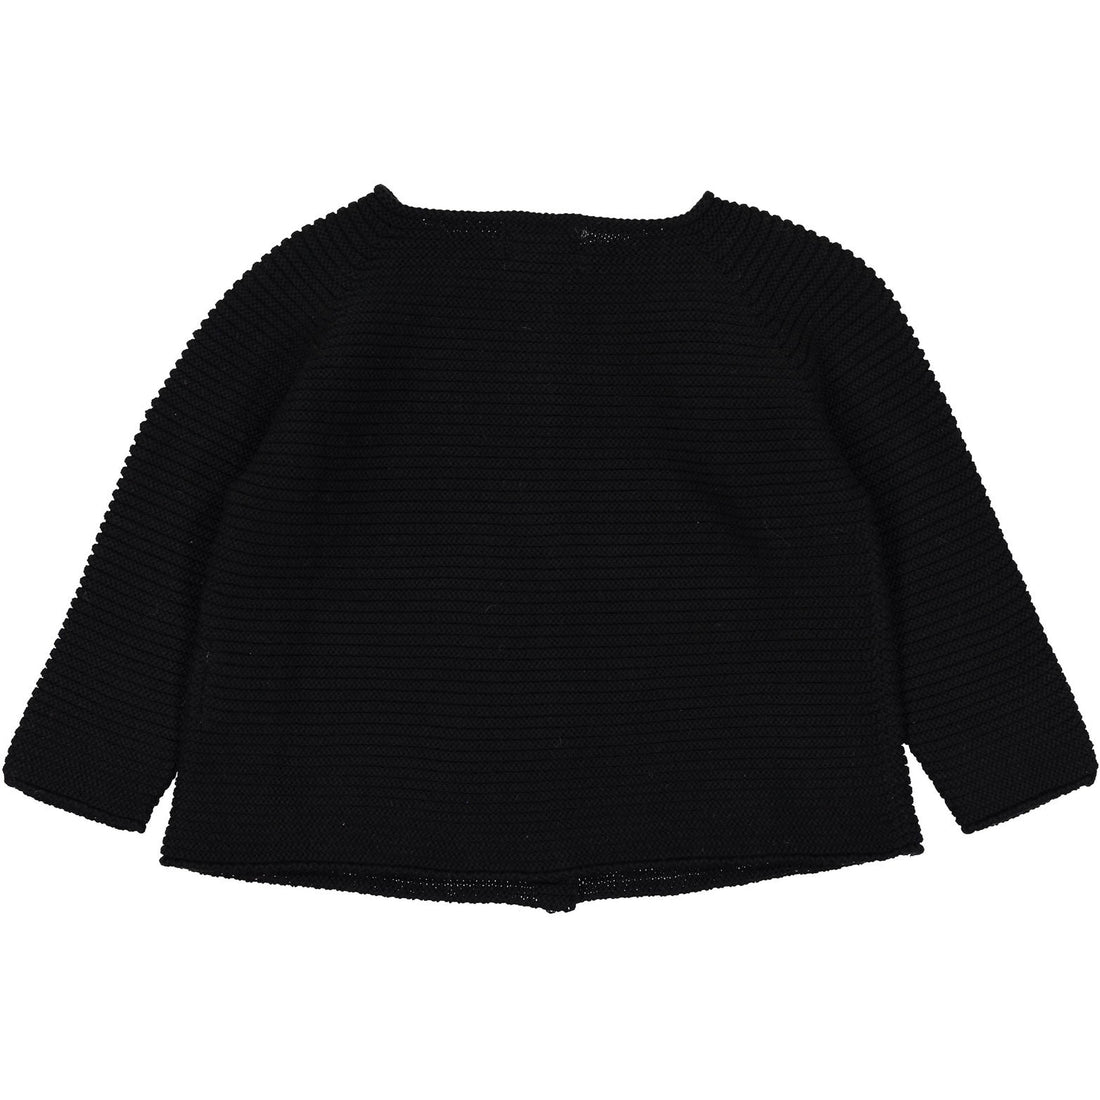 Violeta sweaters Violeta Black Knit Baby Cardigan